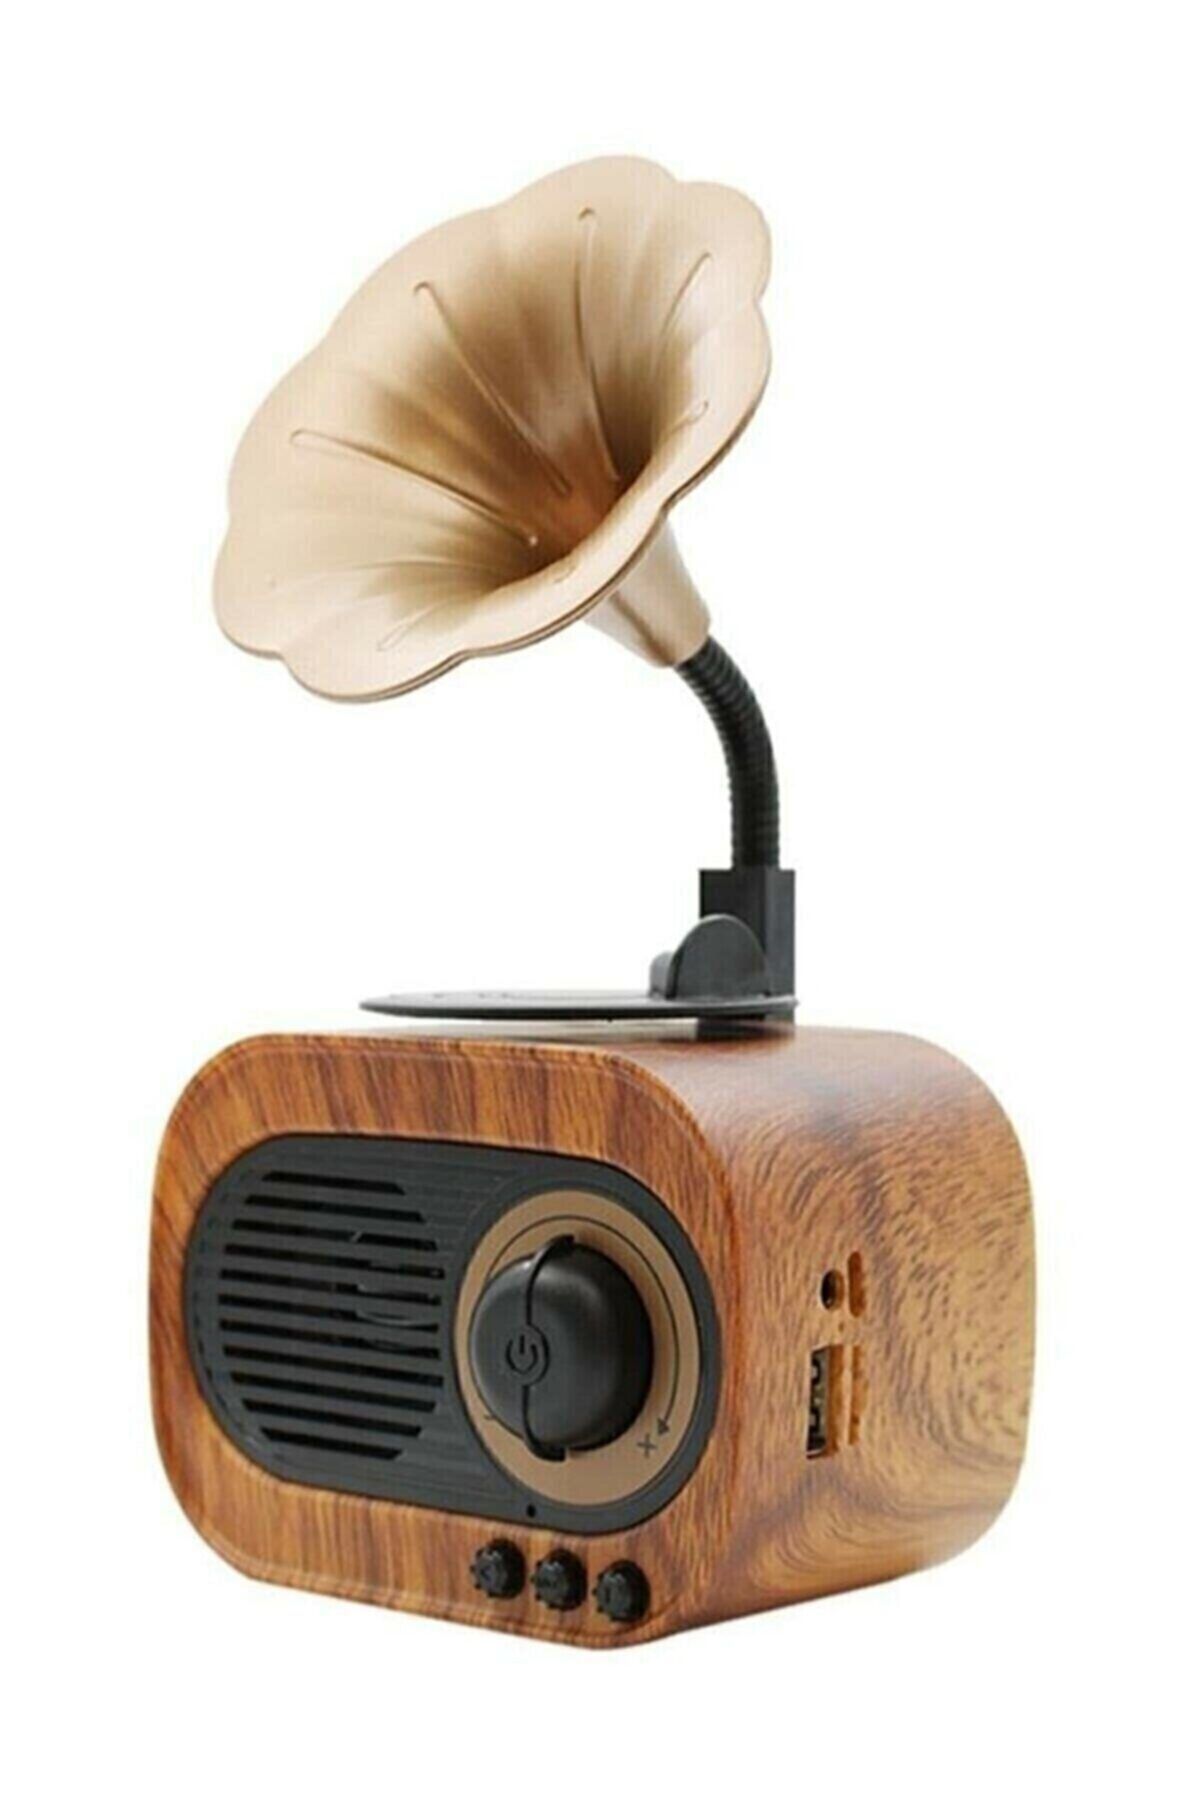 TECHNOMEN B5 Nostaljik Mini Radyo Gramofon Bluetooth Hoparlör Fm Usb Sd Yüksek Ses Speaker